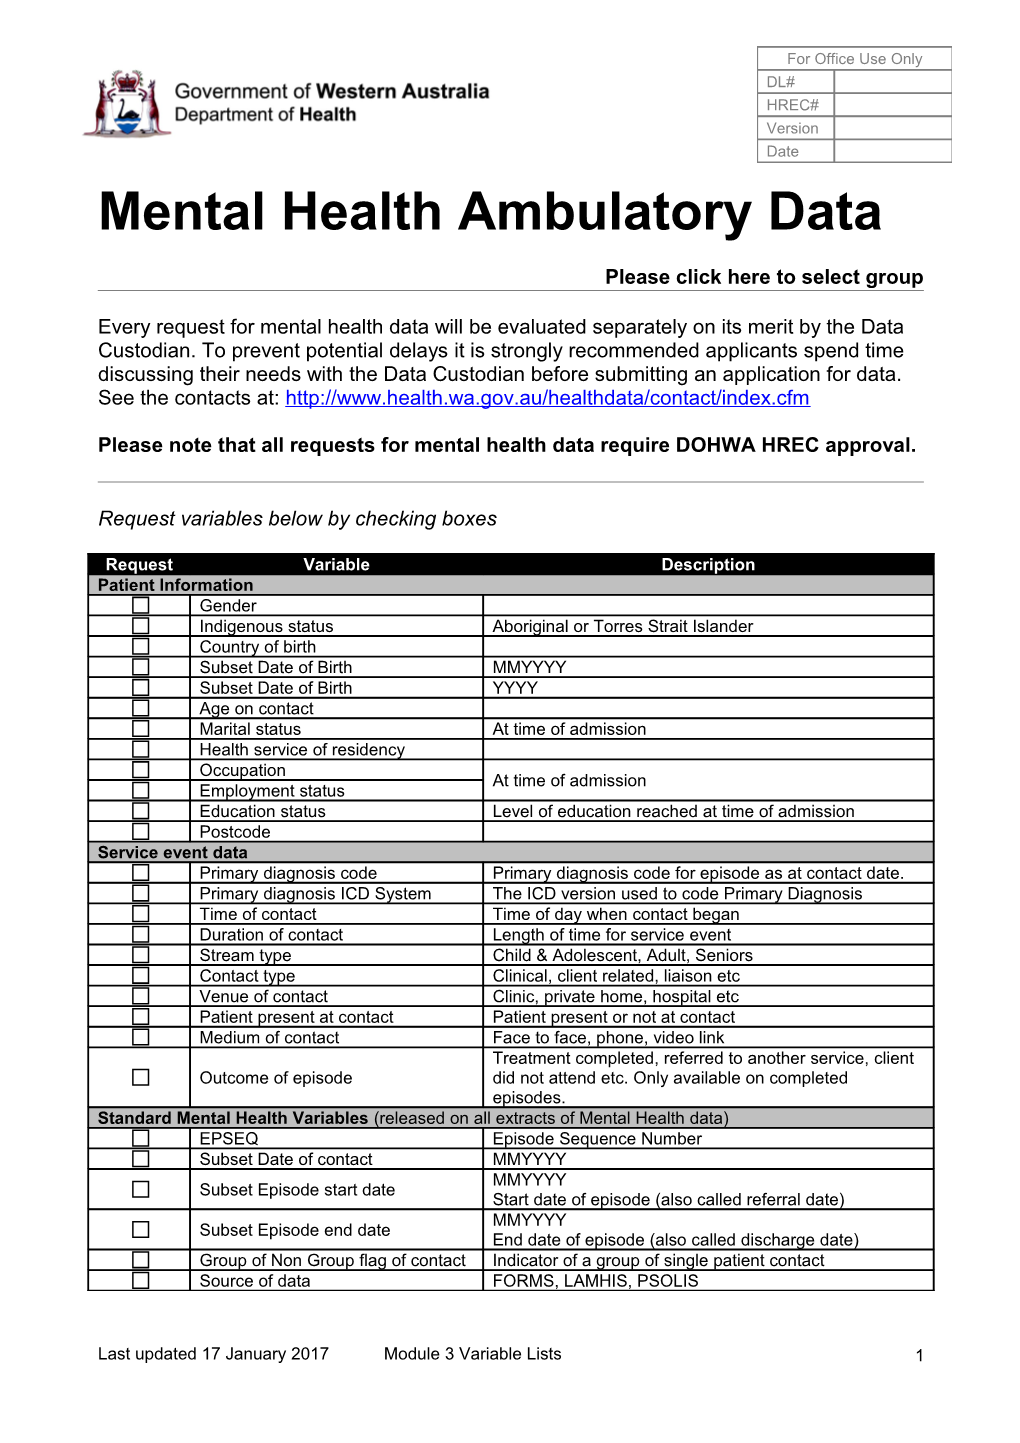 Mental Healthambulatory Data